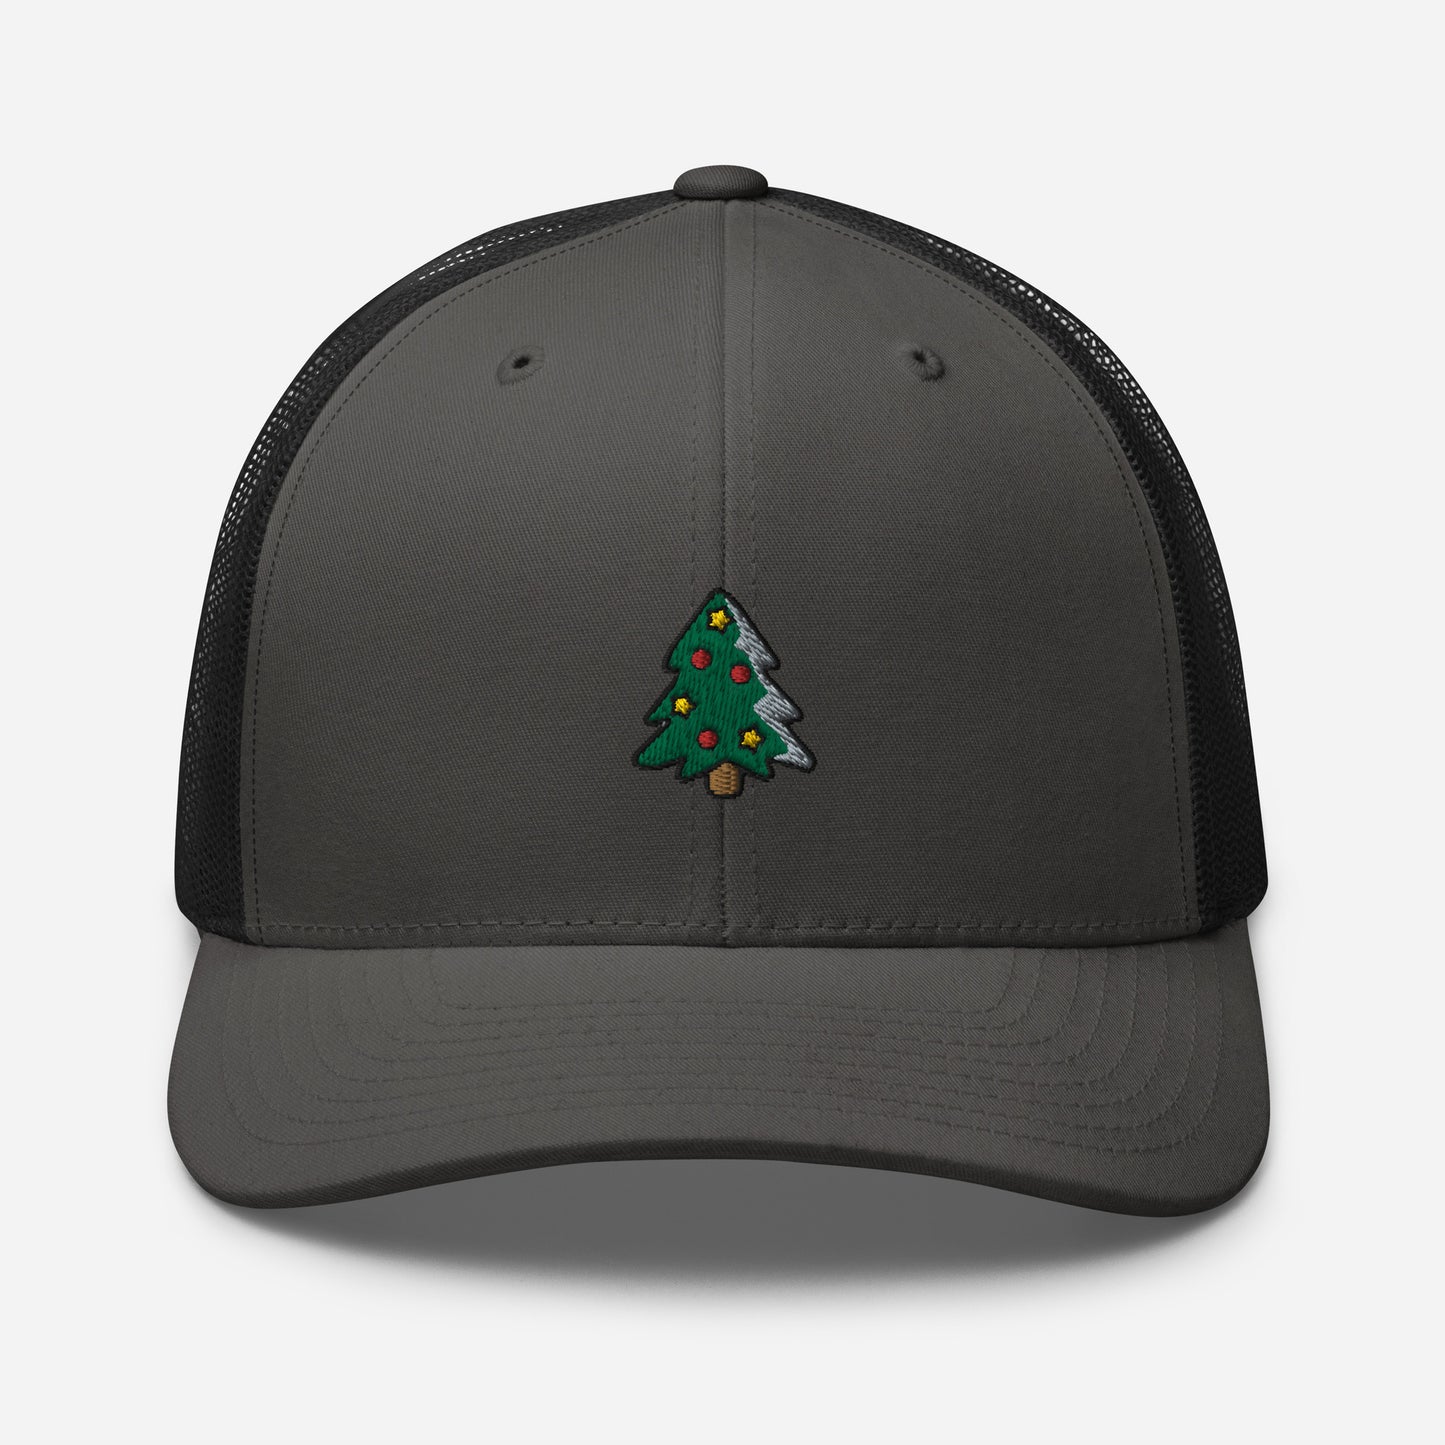 Mesh Cap with Christmas Tree Symbol